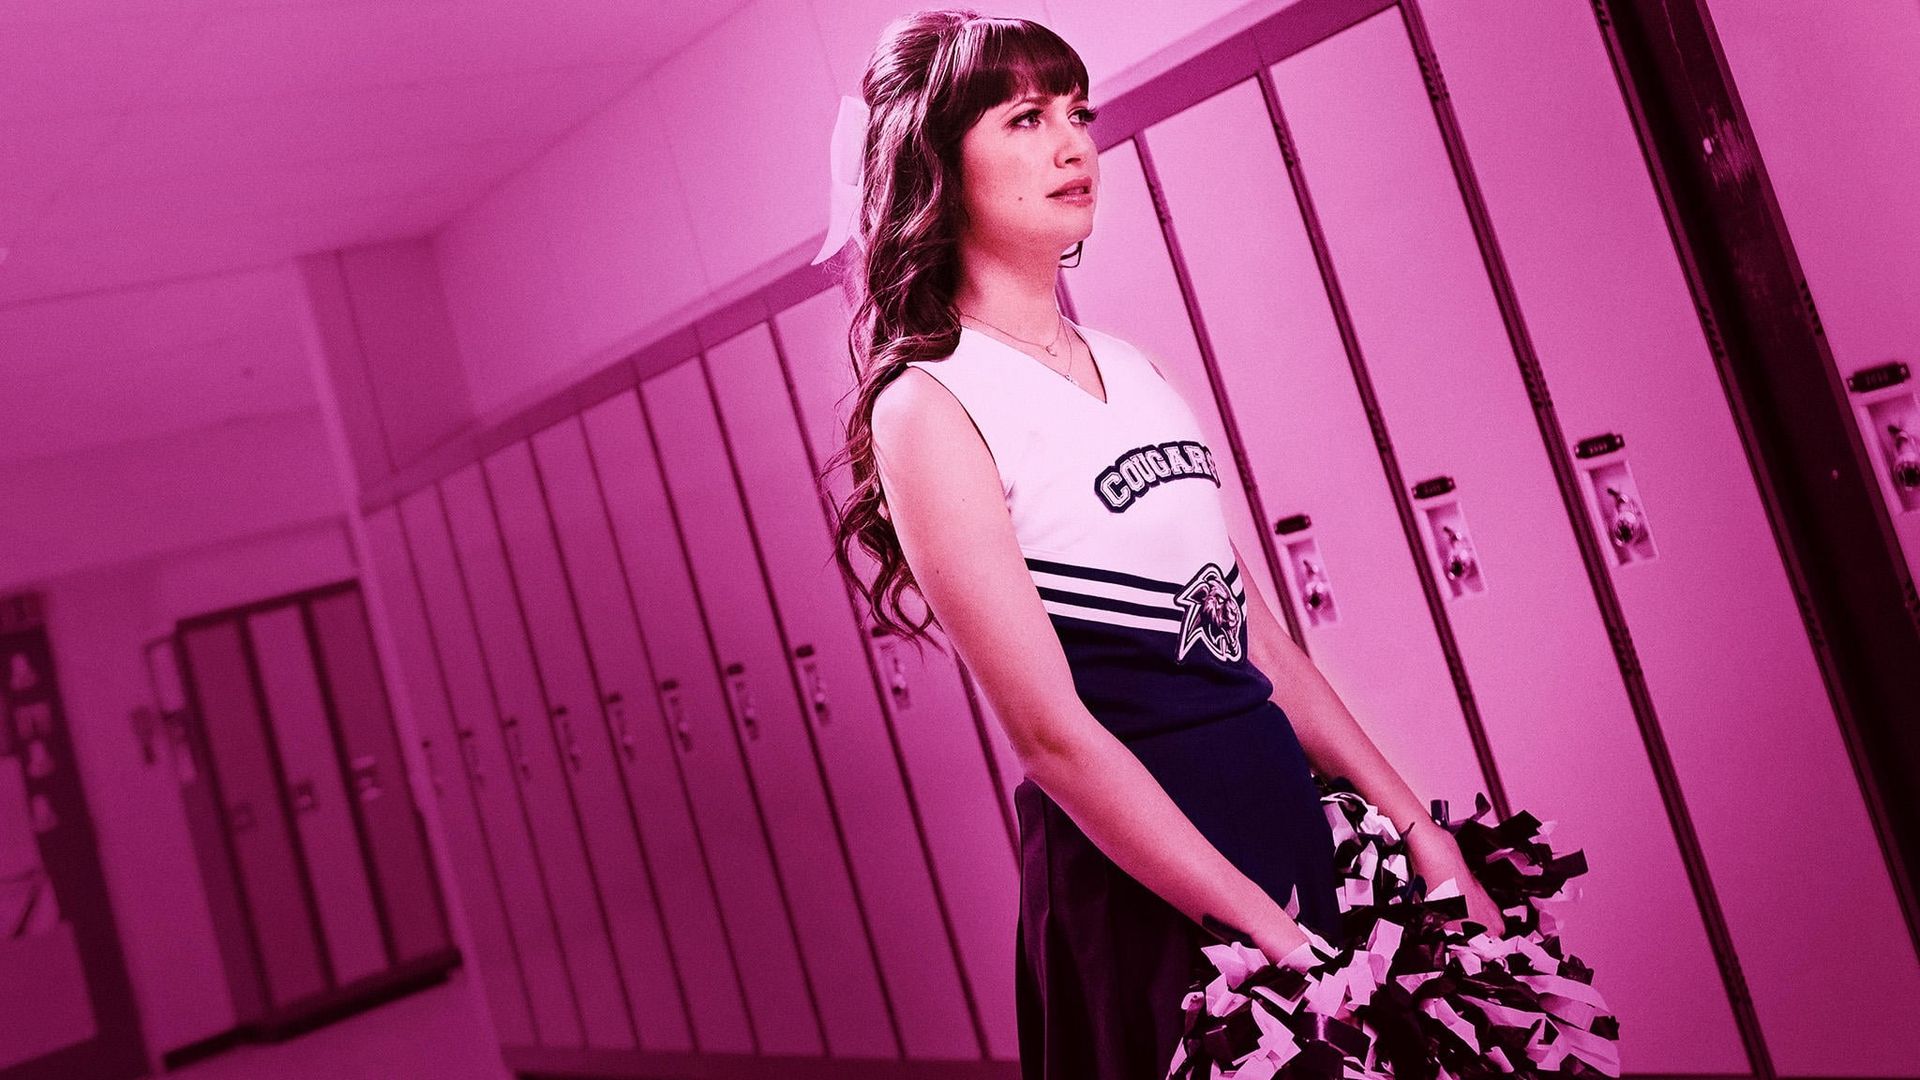 Identity Theft of a Cheerleader background